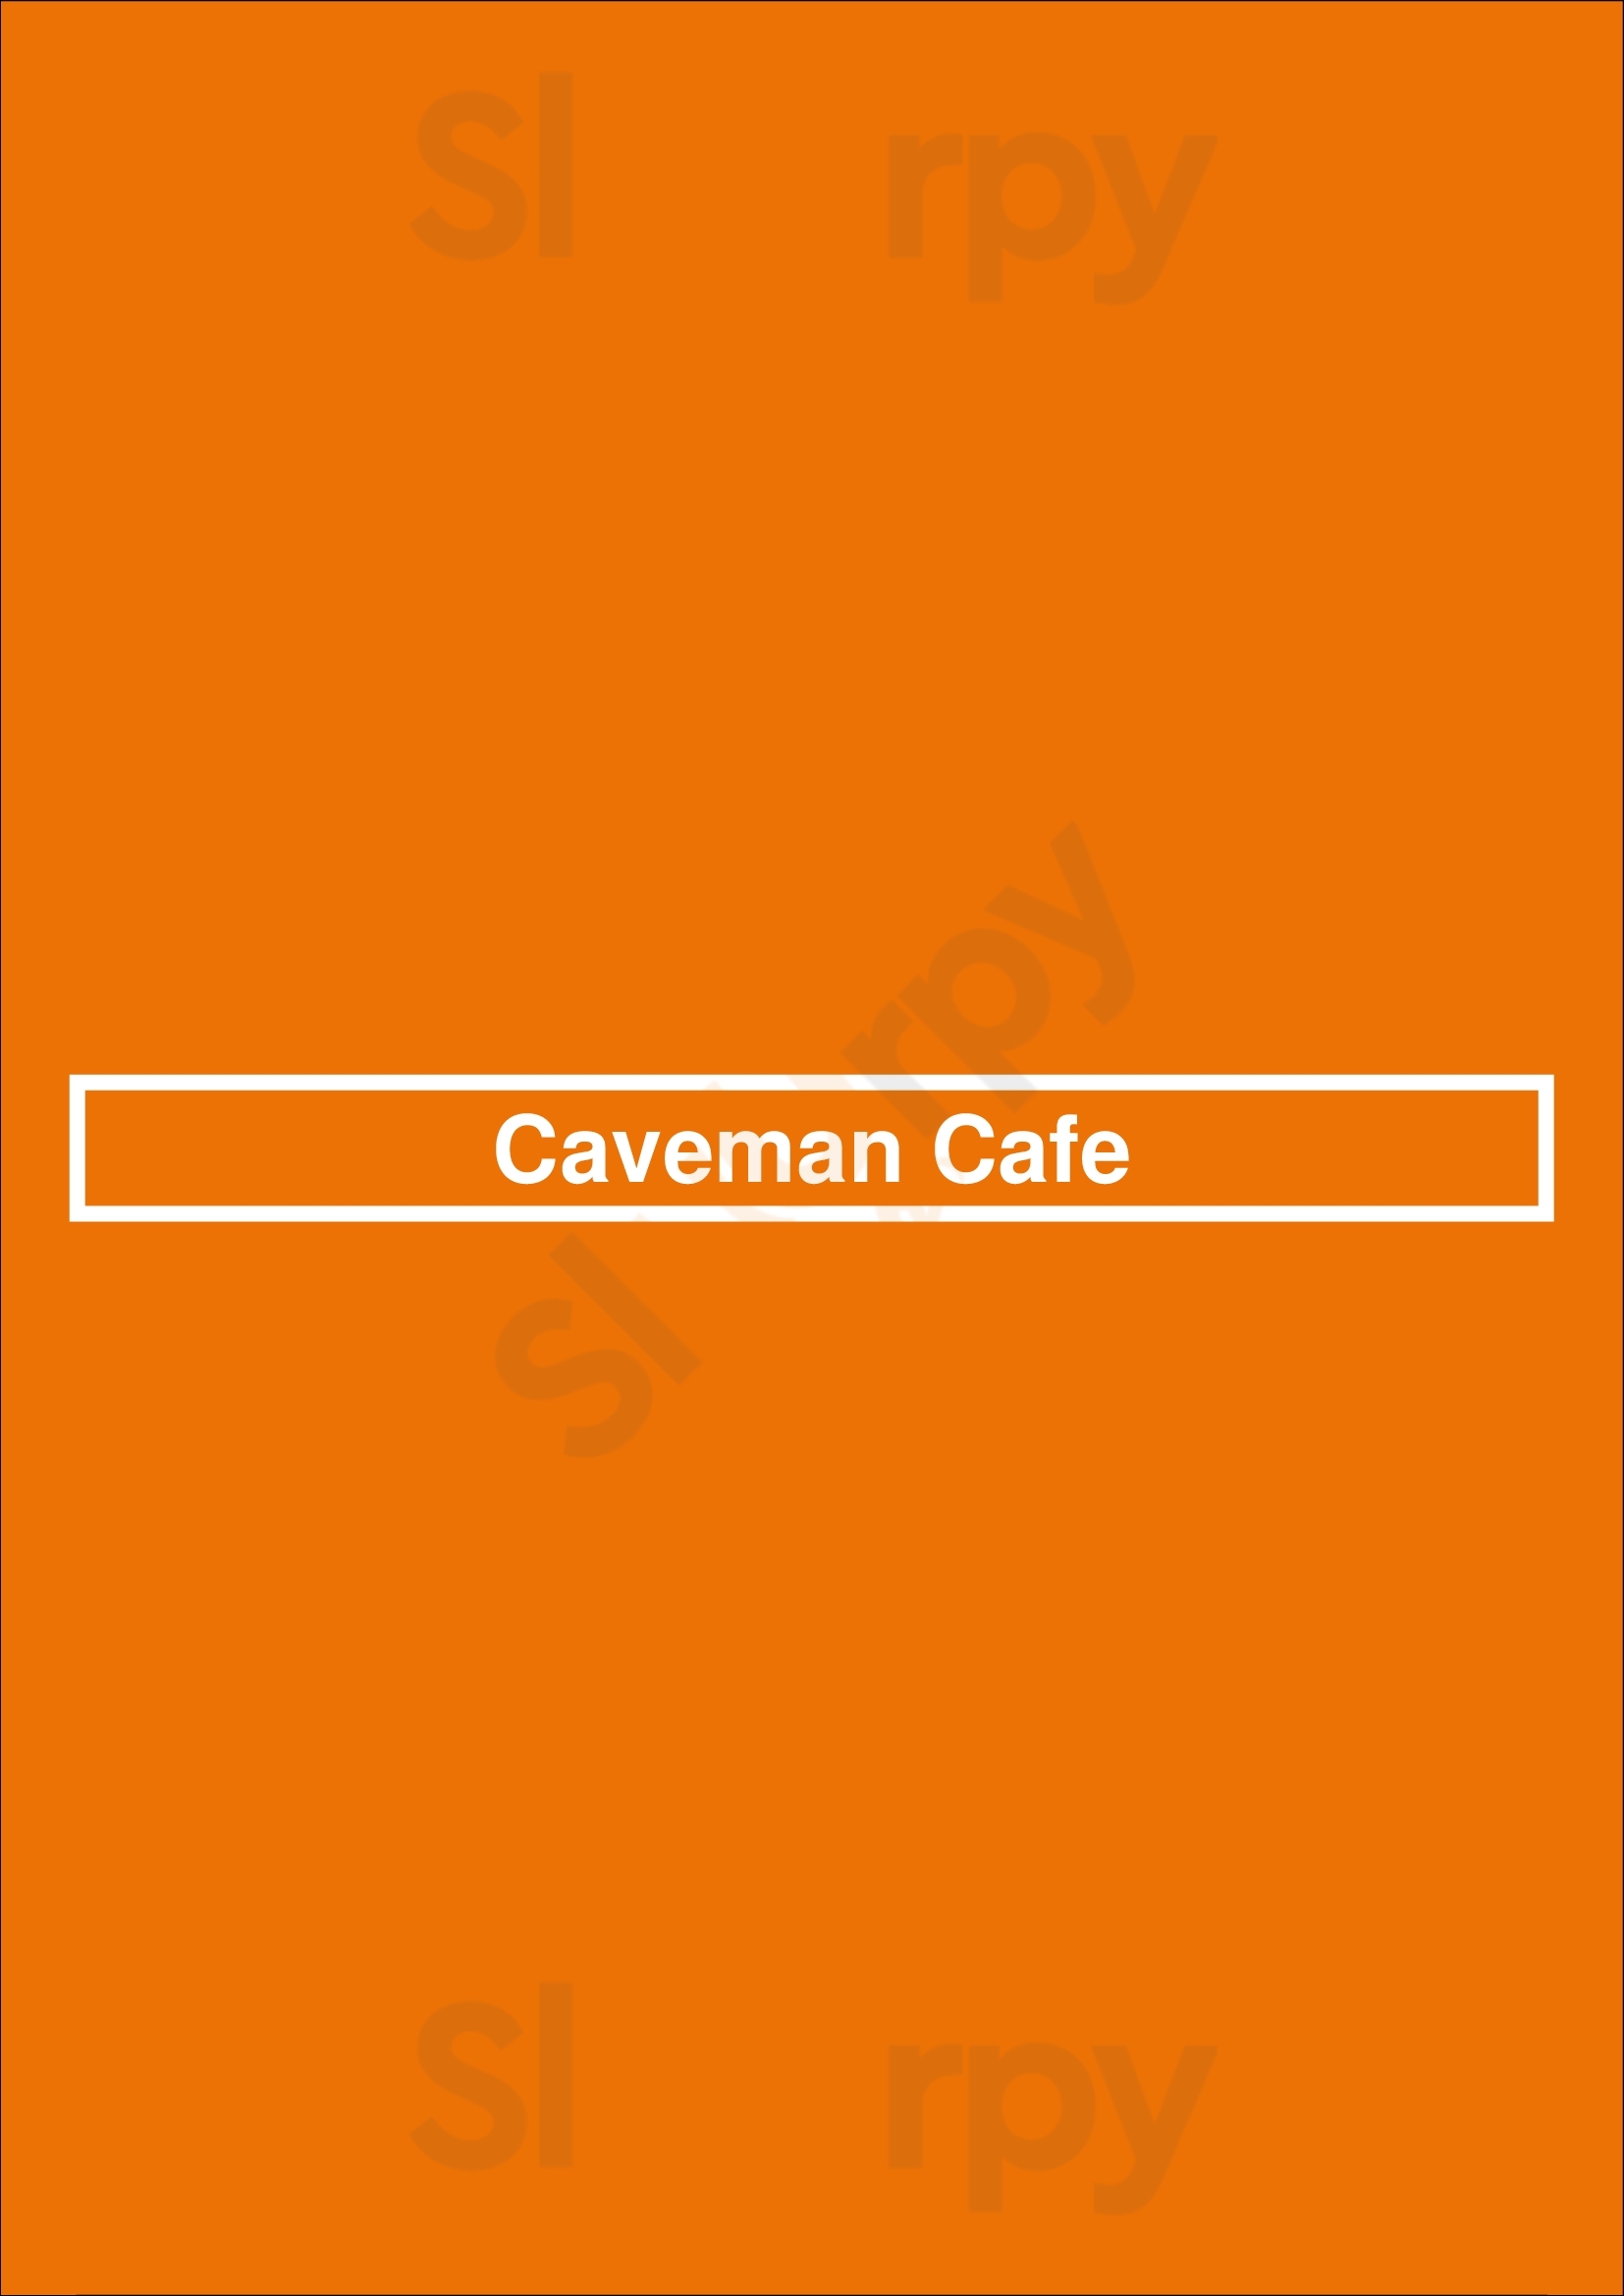 Caveman Cafe Vancouver Menu - 1